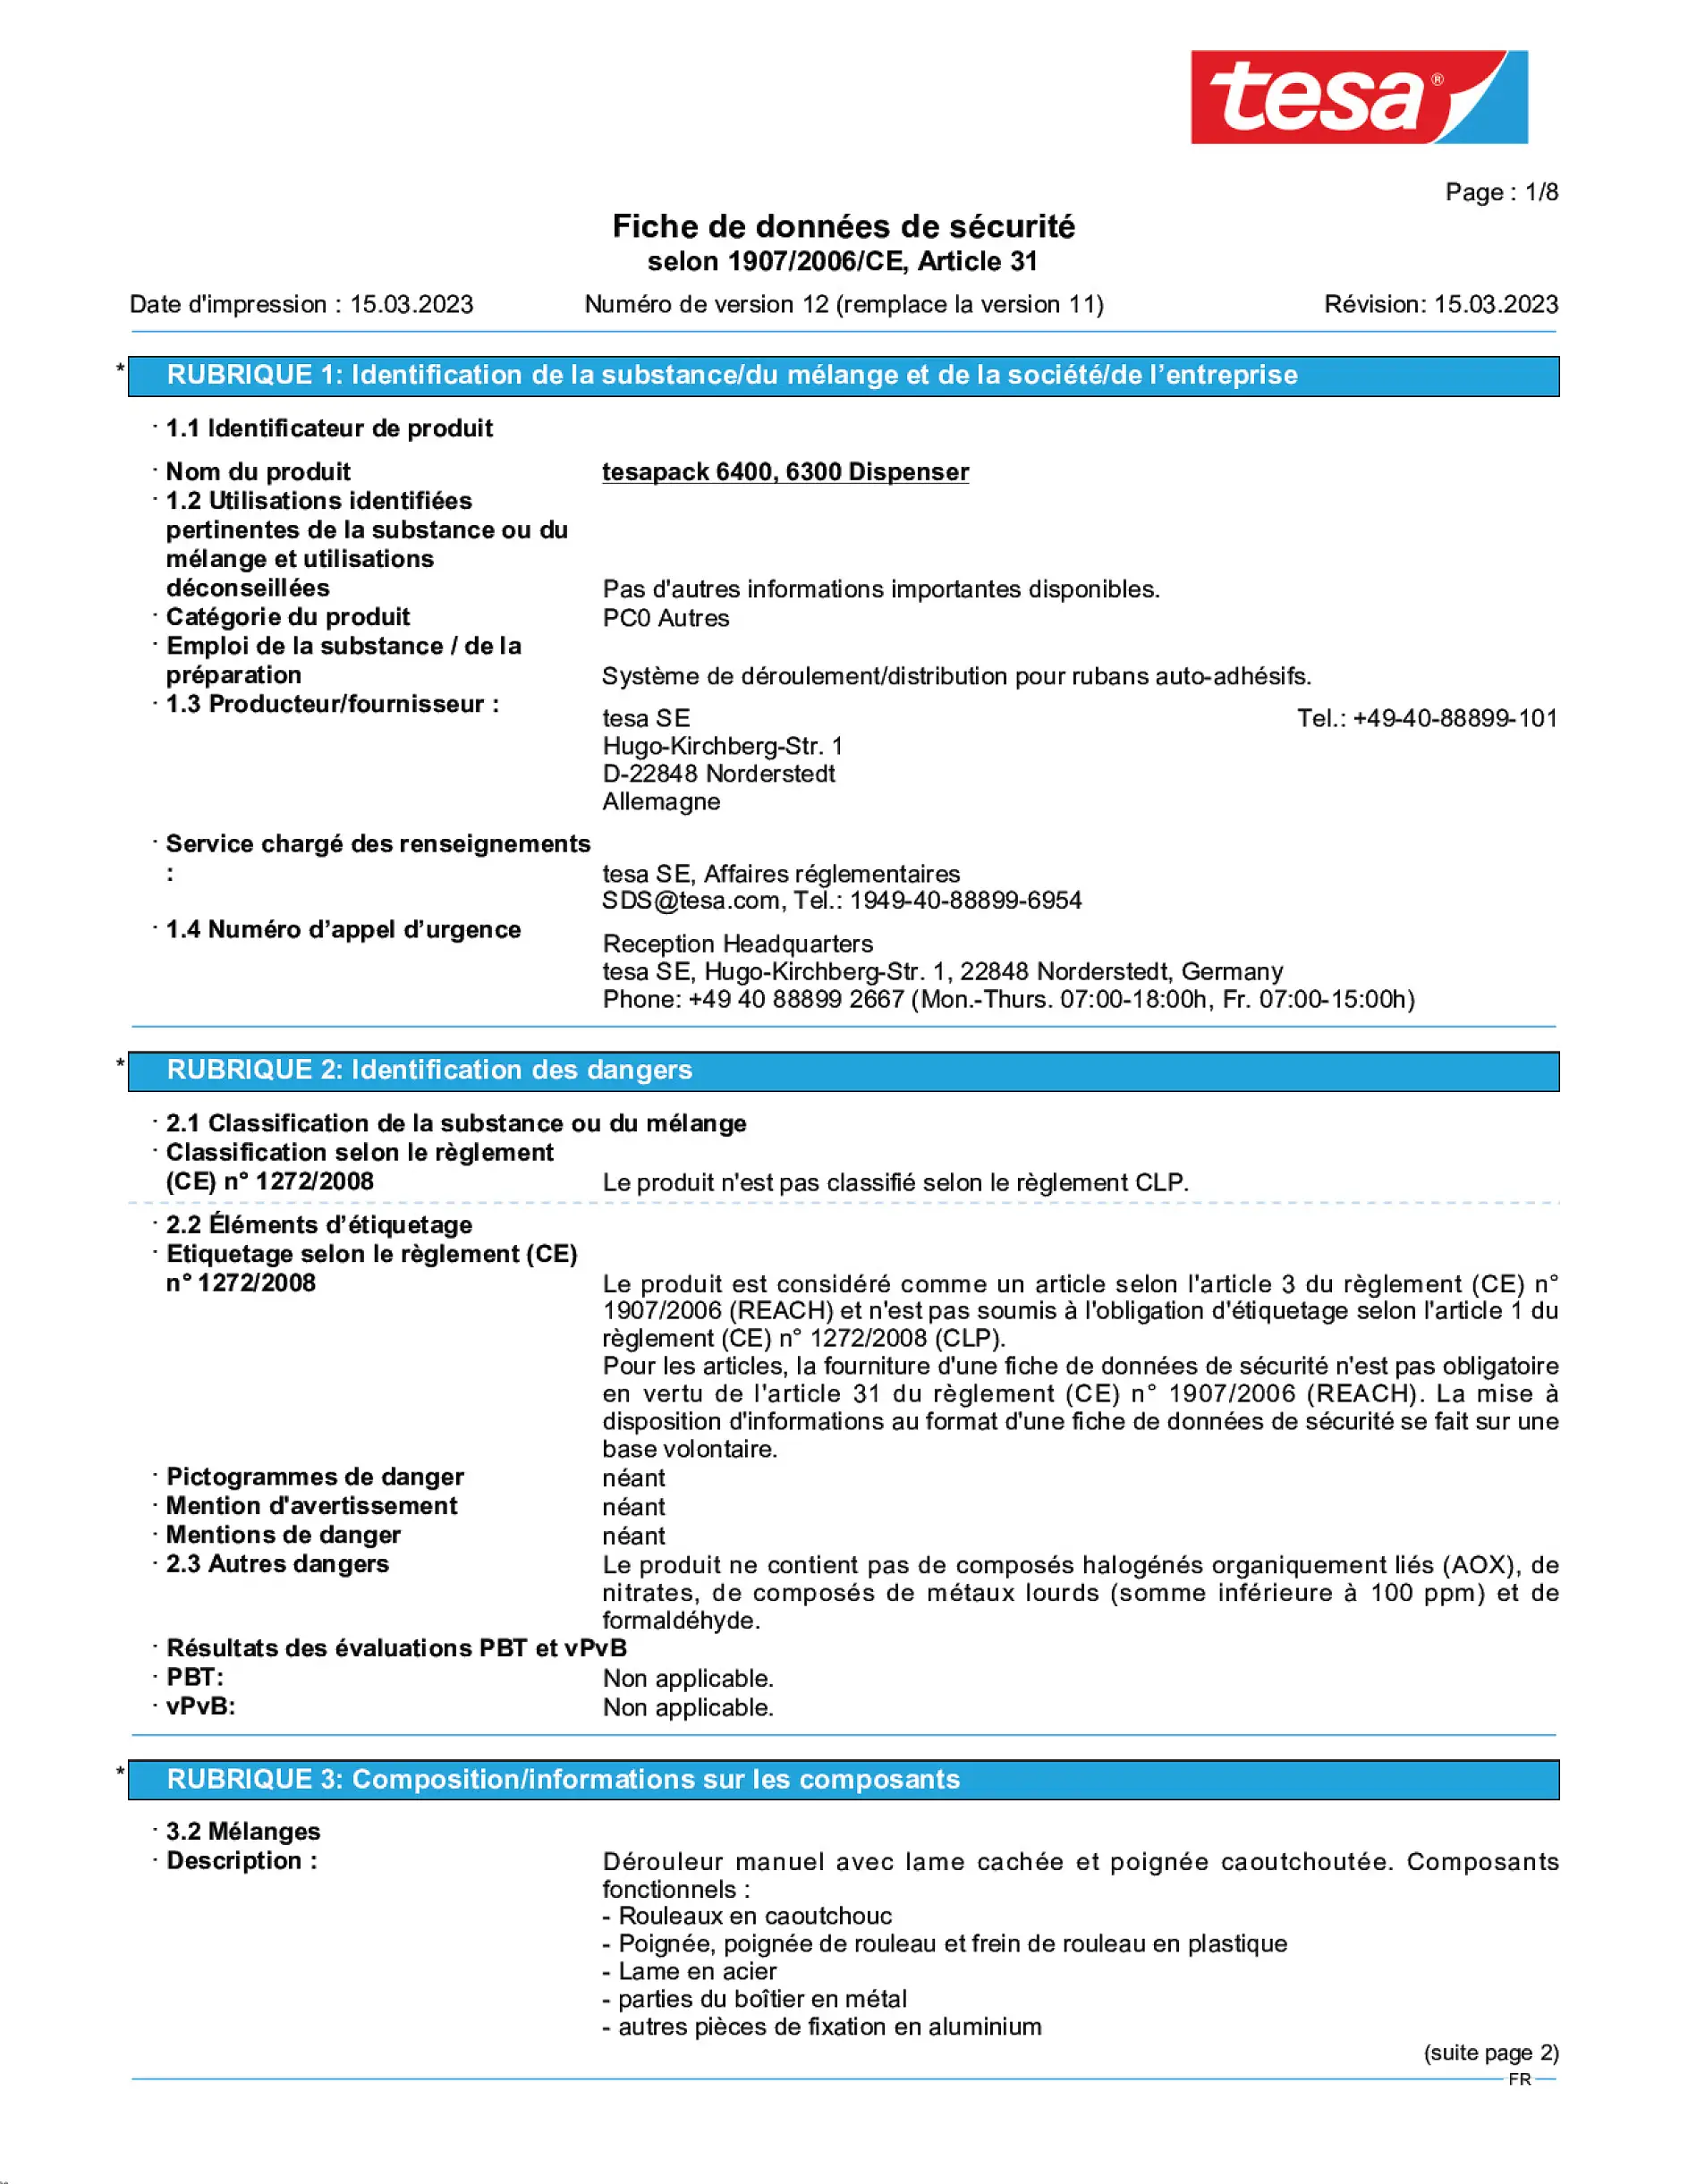 Safety data sheet_tesapack® 06400_fr-FR_v12